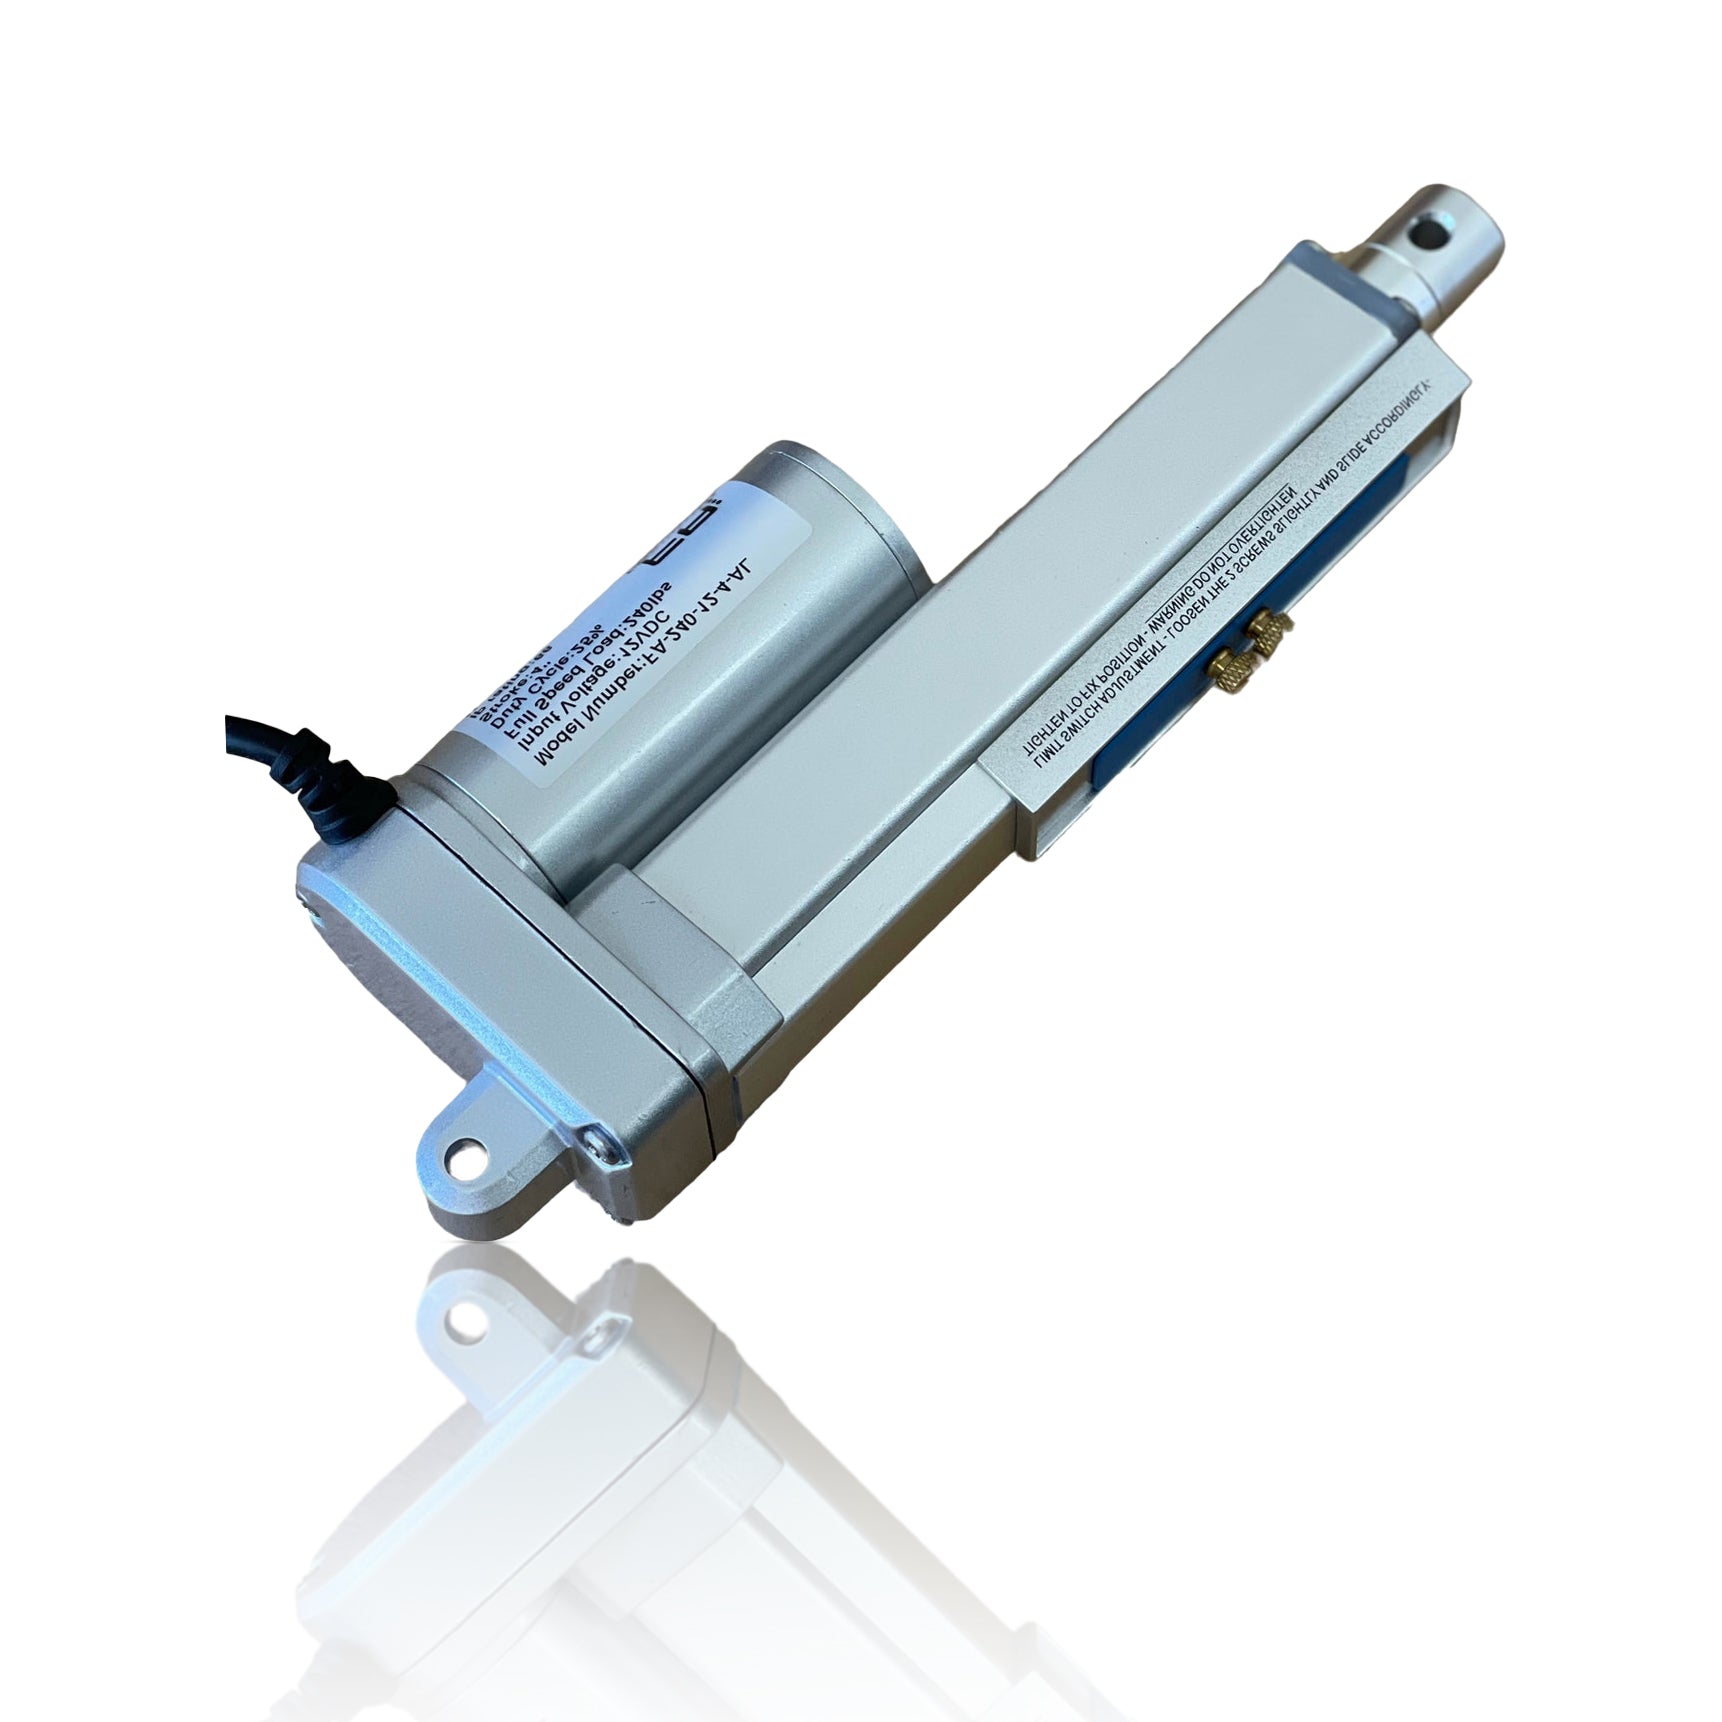 Adjustable Stroke Linear Actuators Product Image